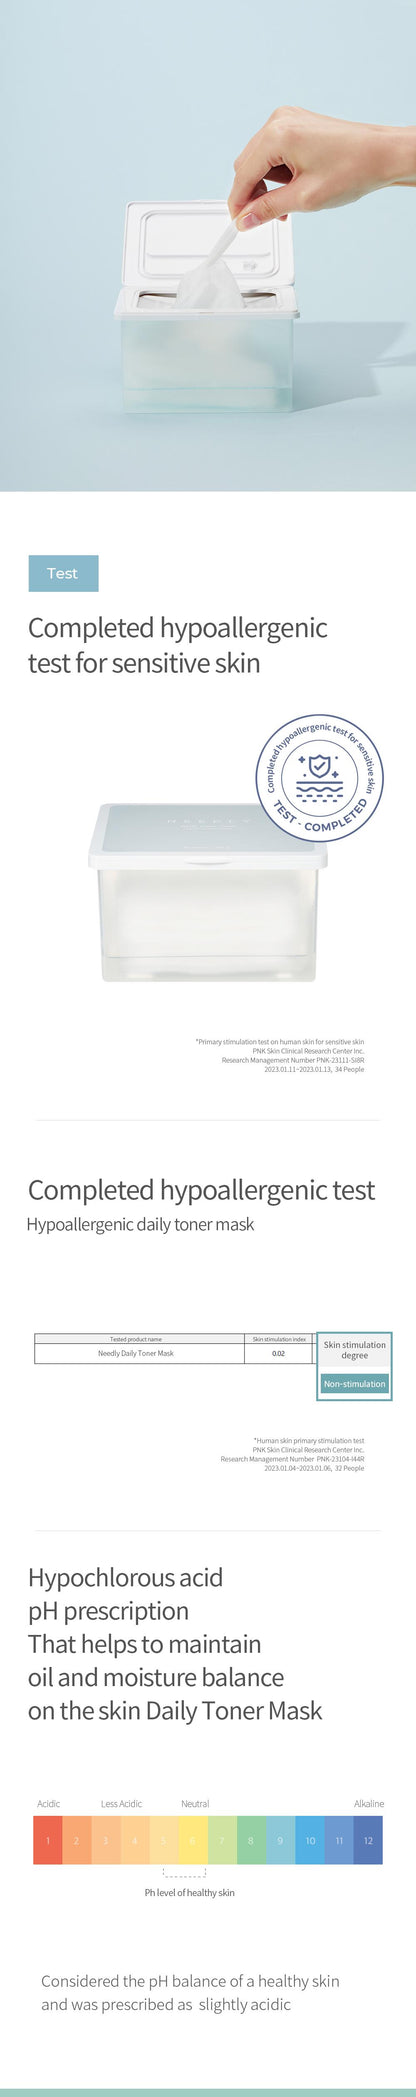 hyaluronic acid face mask for sensitive skin